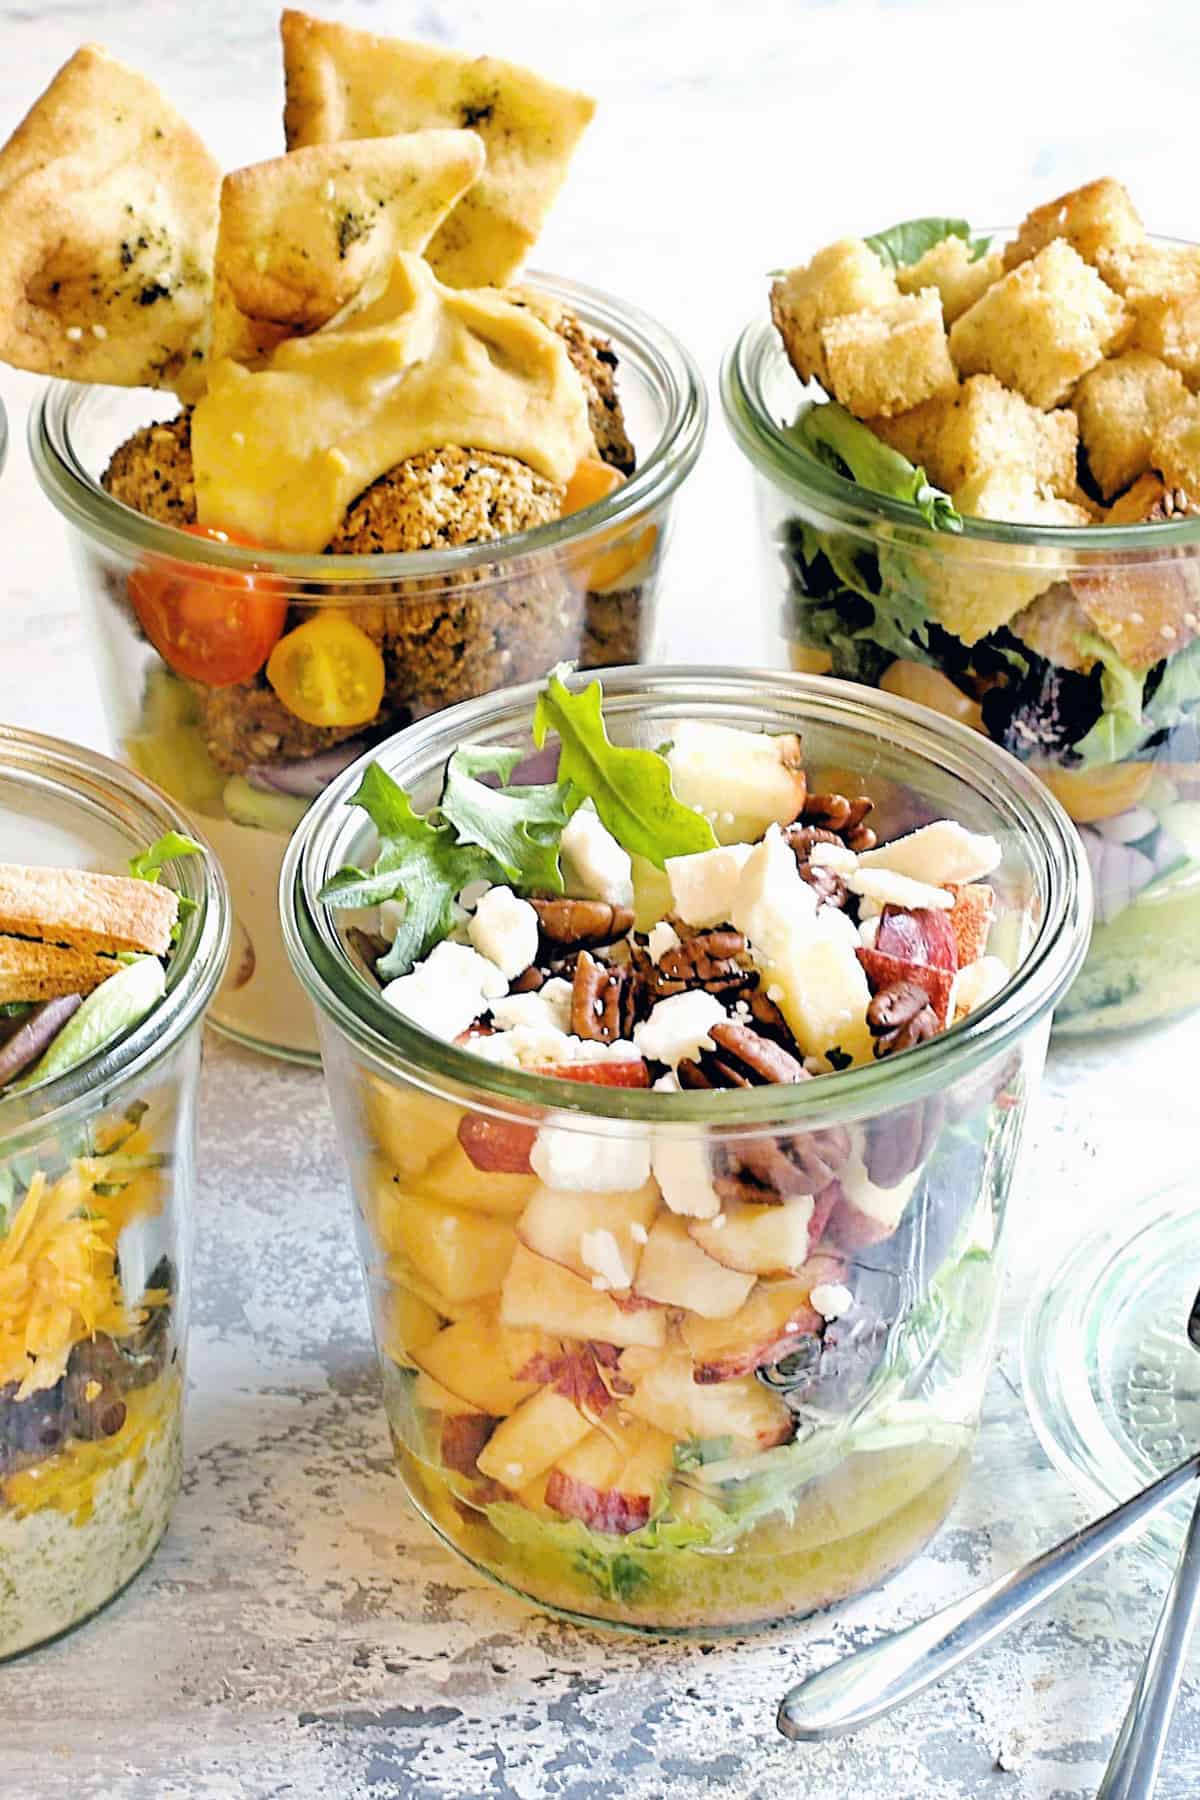 https://www.thecreativebite.com/wp-content/uploads/2021/02/Vegetarian-Salads-in-a-Jar-picture.jpg